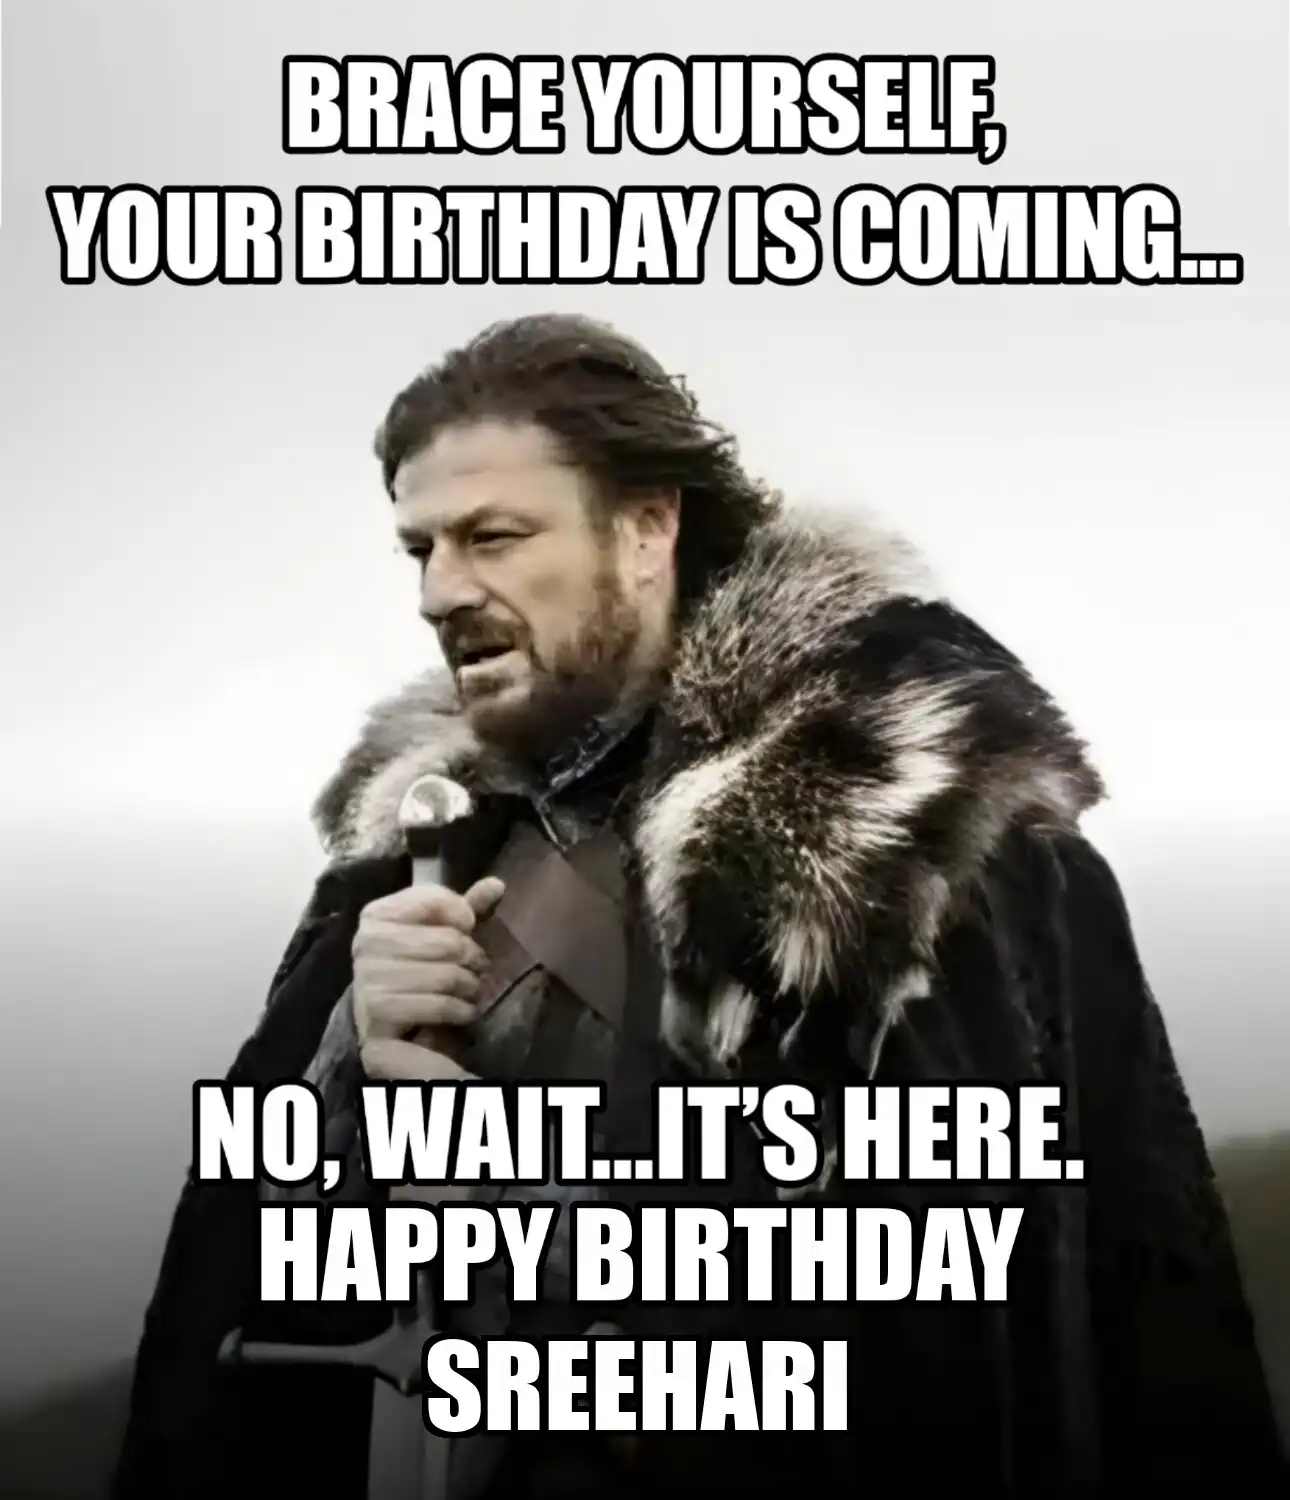 Happy Birthday Sreehari Brace Yourself Your Birthday Is Coming Meme